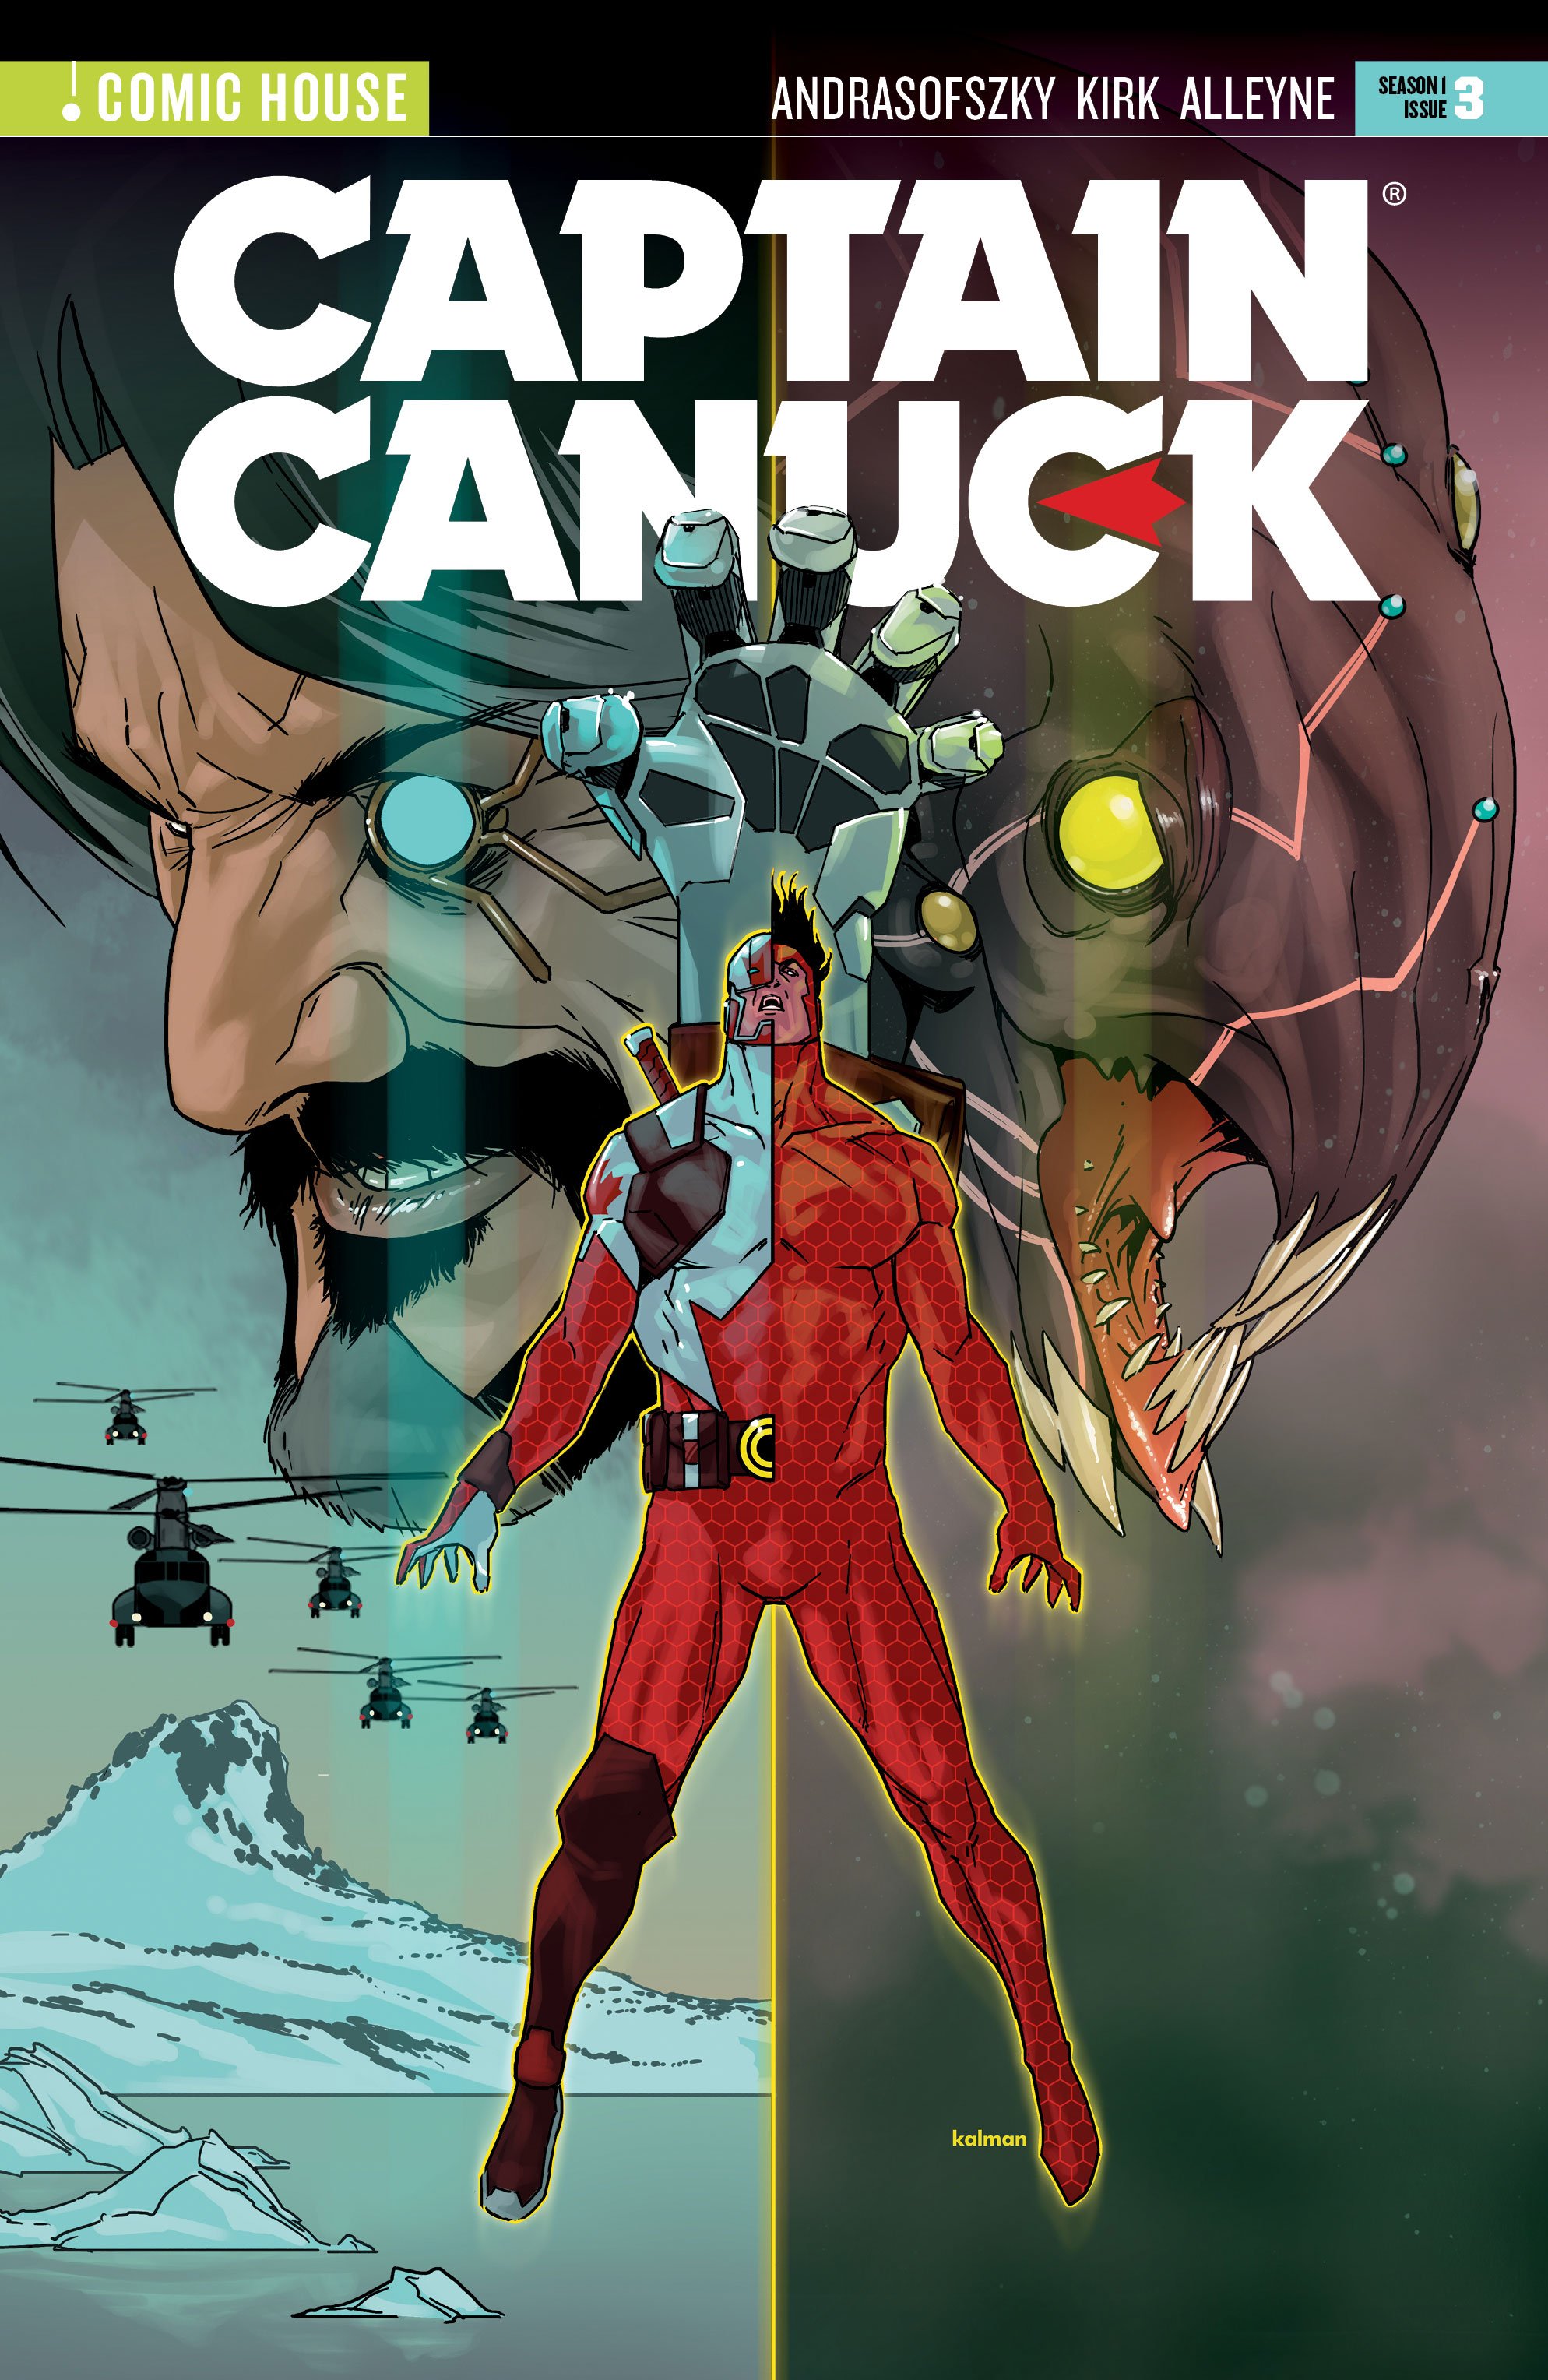 CaptainCanuck_003_S1_Issue3_cover-A.jpg